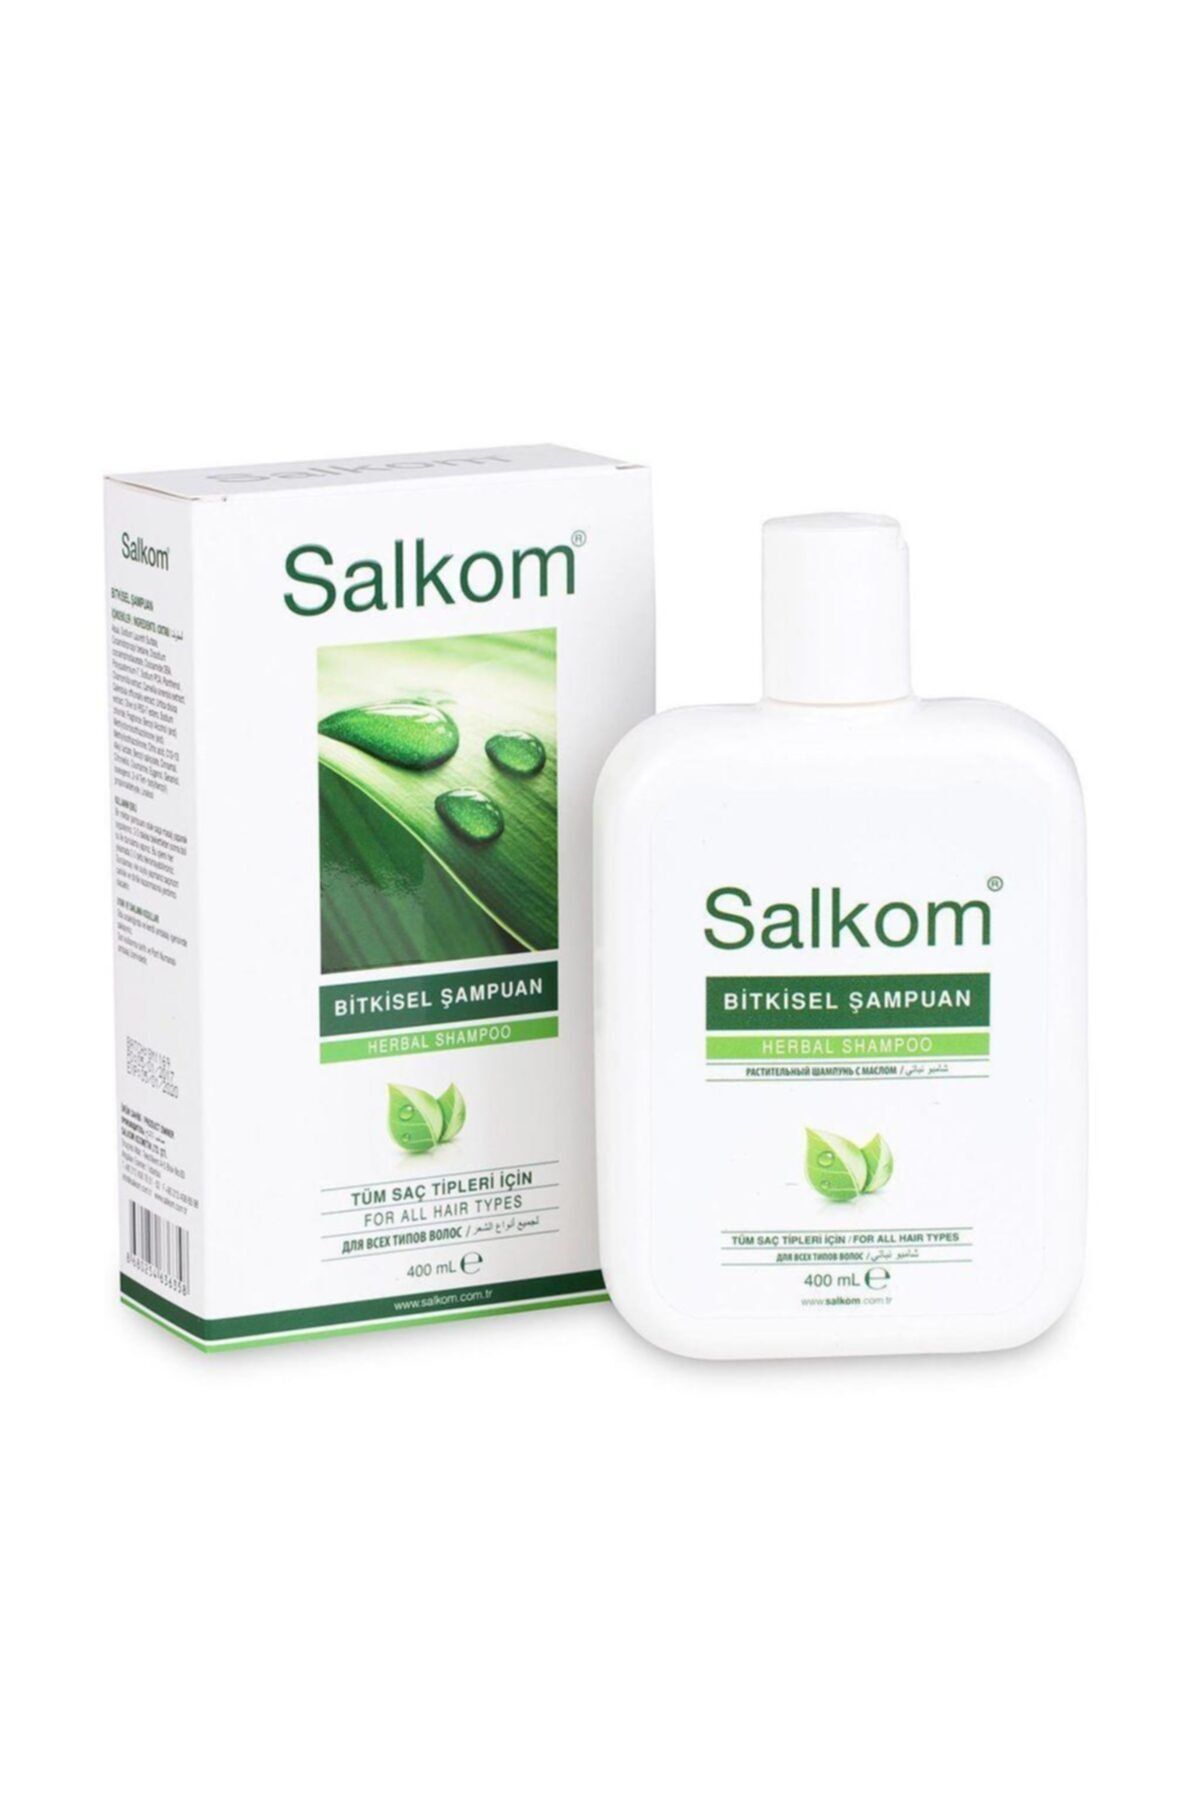 Salkom Bitkisel Içerikli Şampuan 400 ml